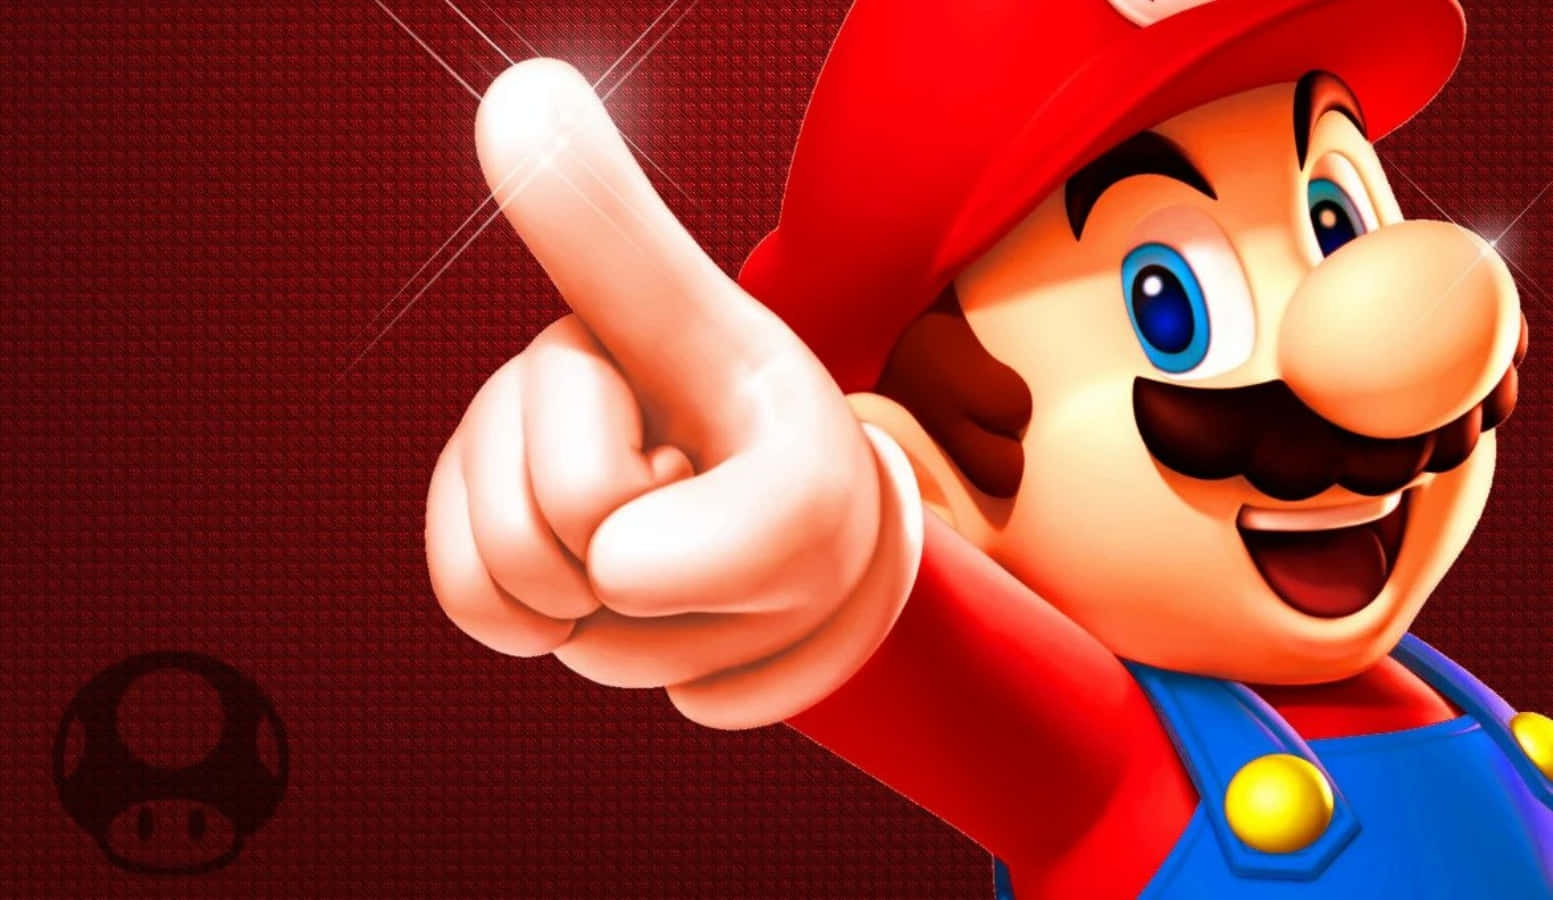 Mario adventures through the Mushroom Kingdom